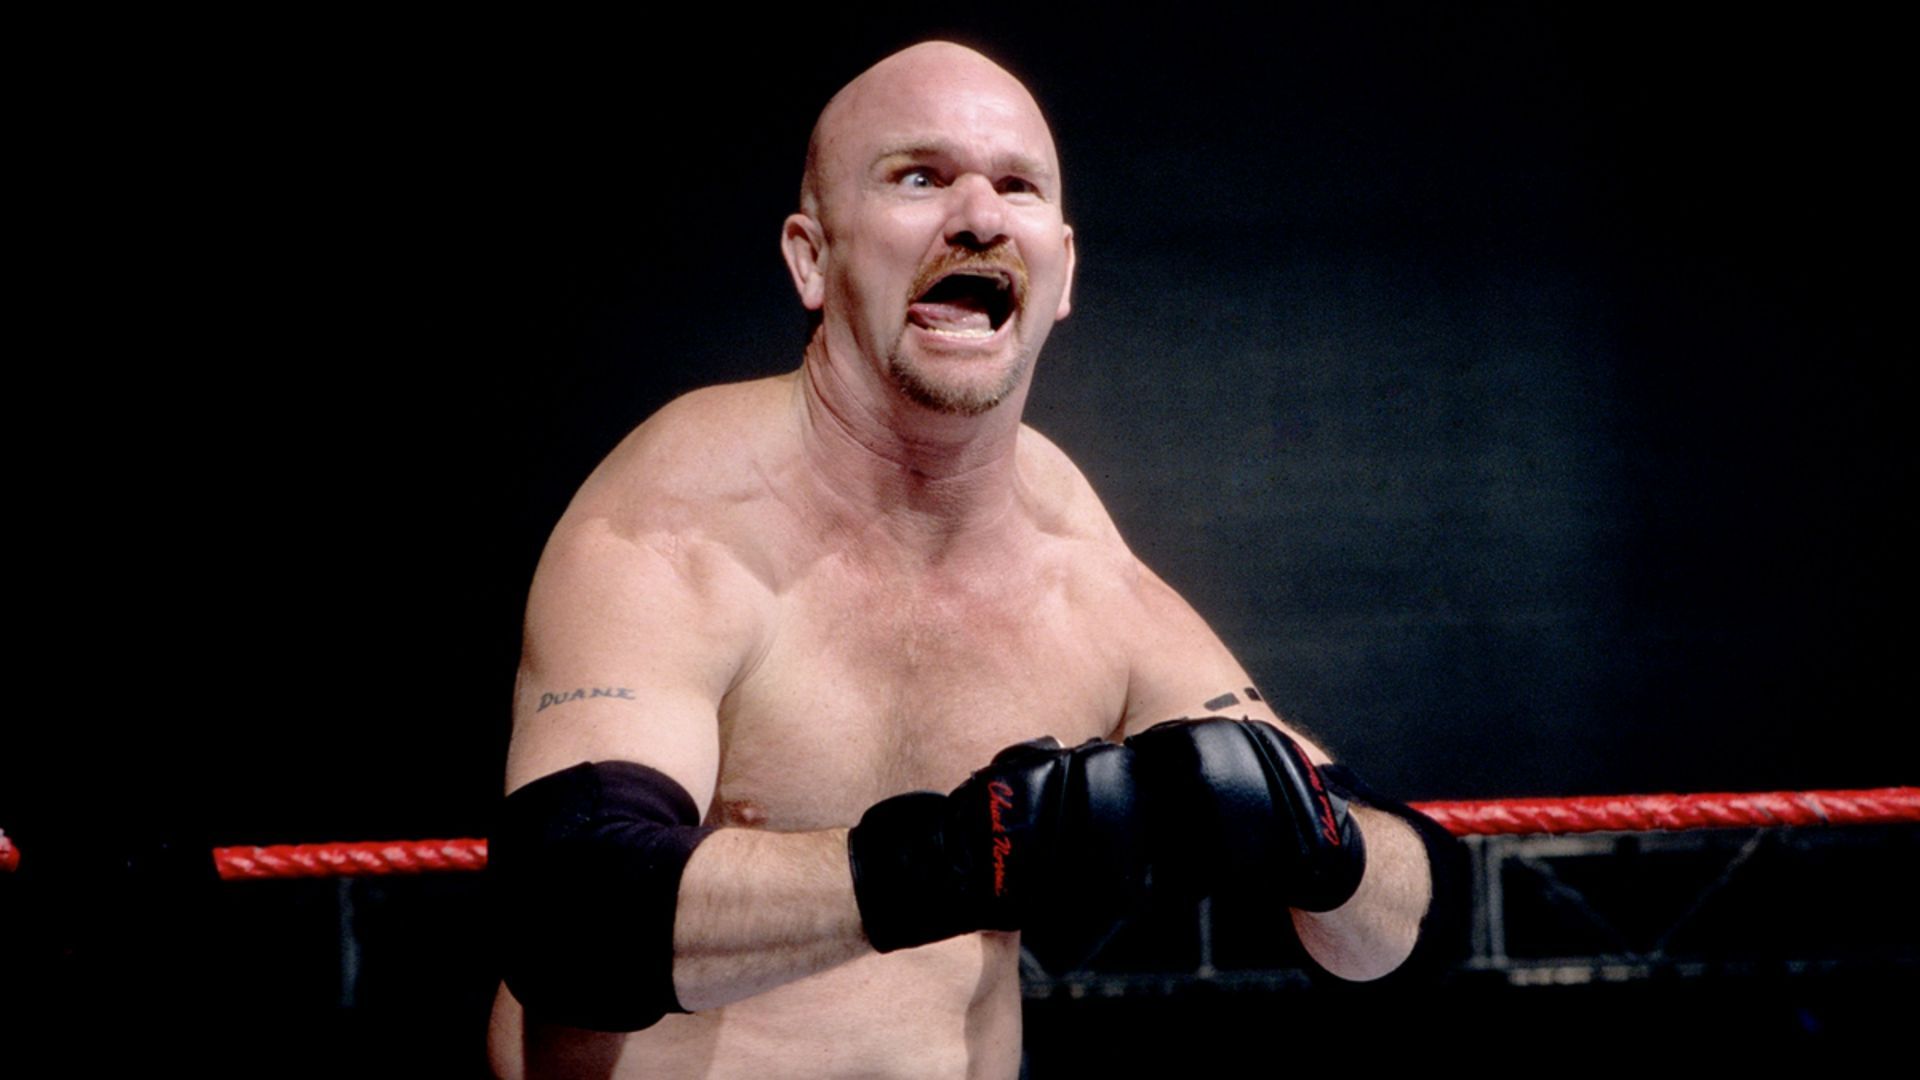 Gillberg retired from professional wrestling in 2020